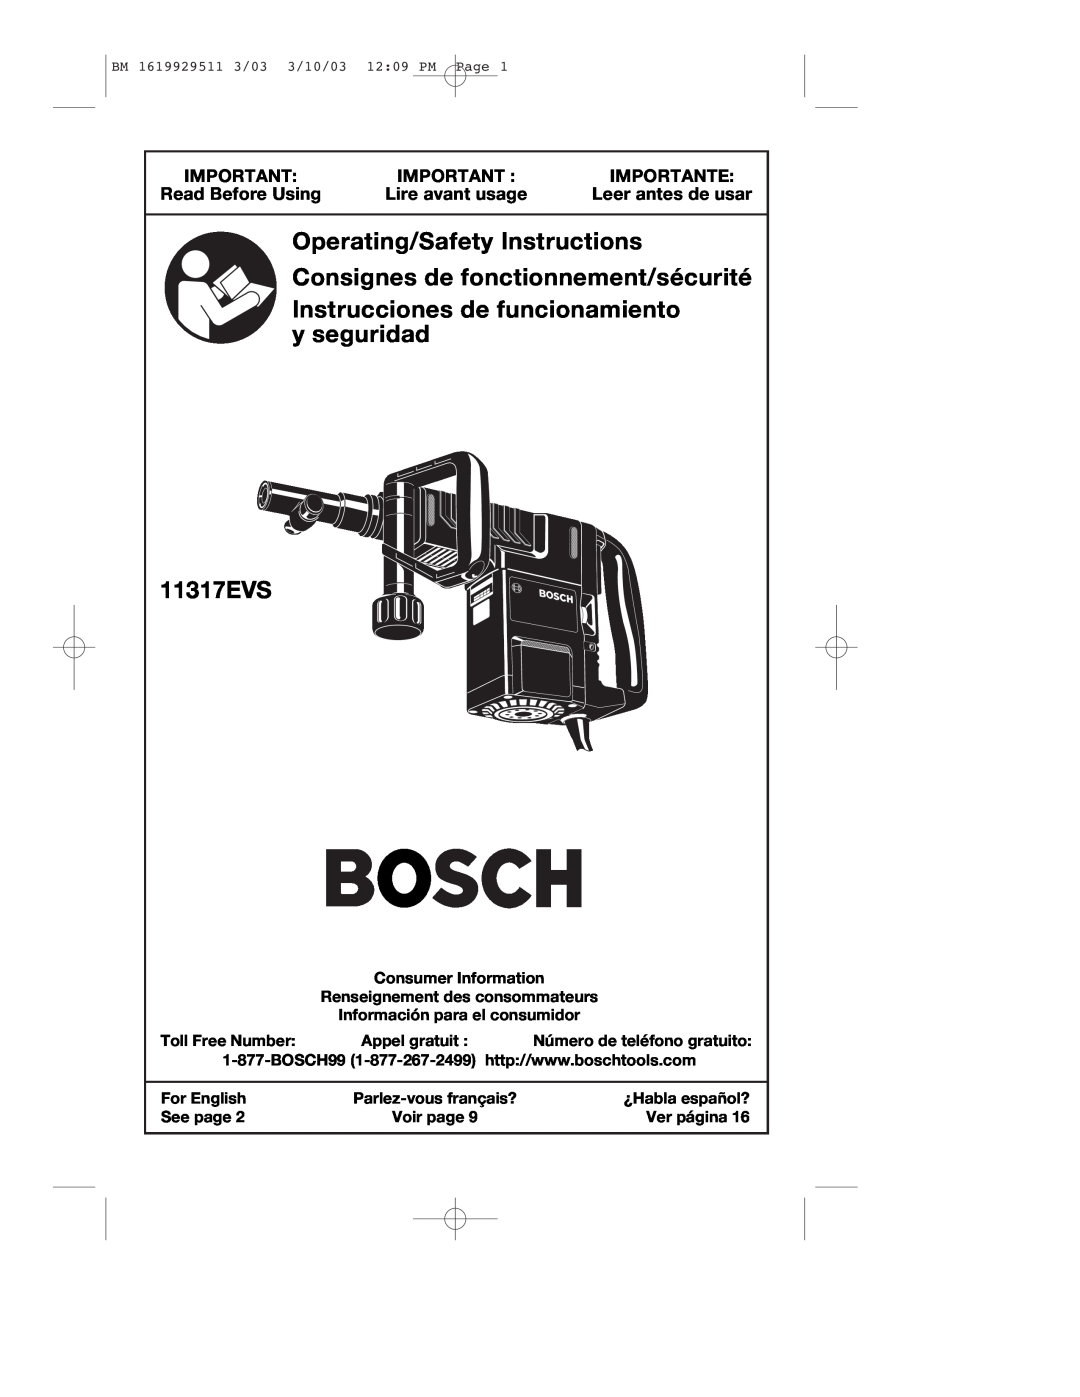 Bosch Power Tools 11317EVS manual Importante, Read Before Using, Lire avant usage, Leer antes de usar 